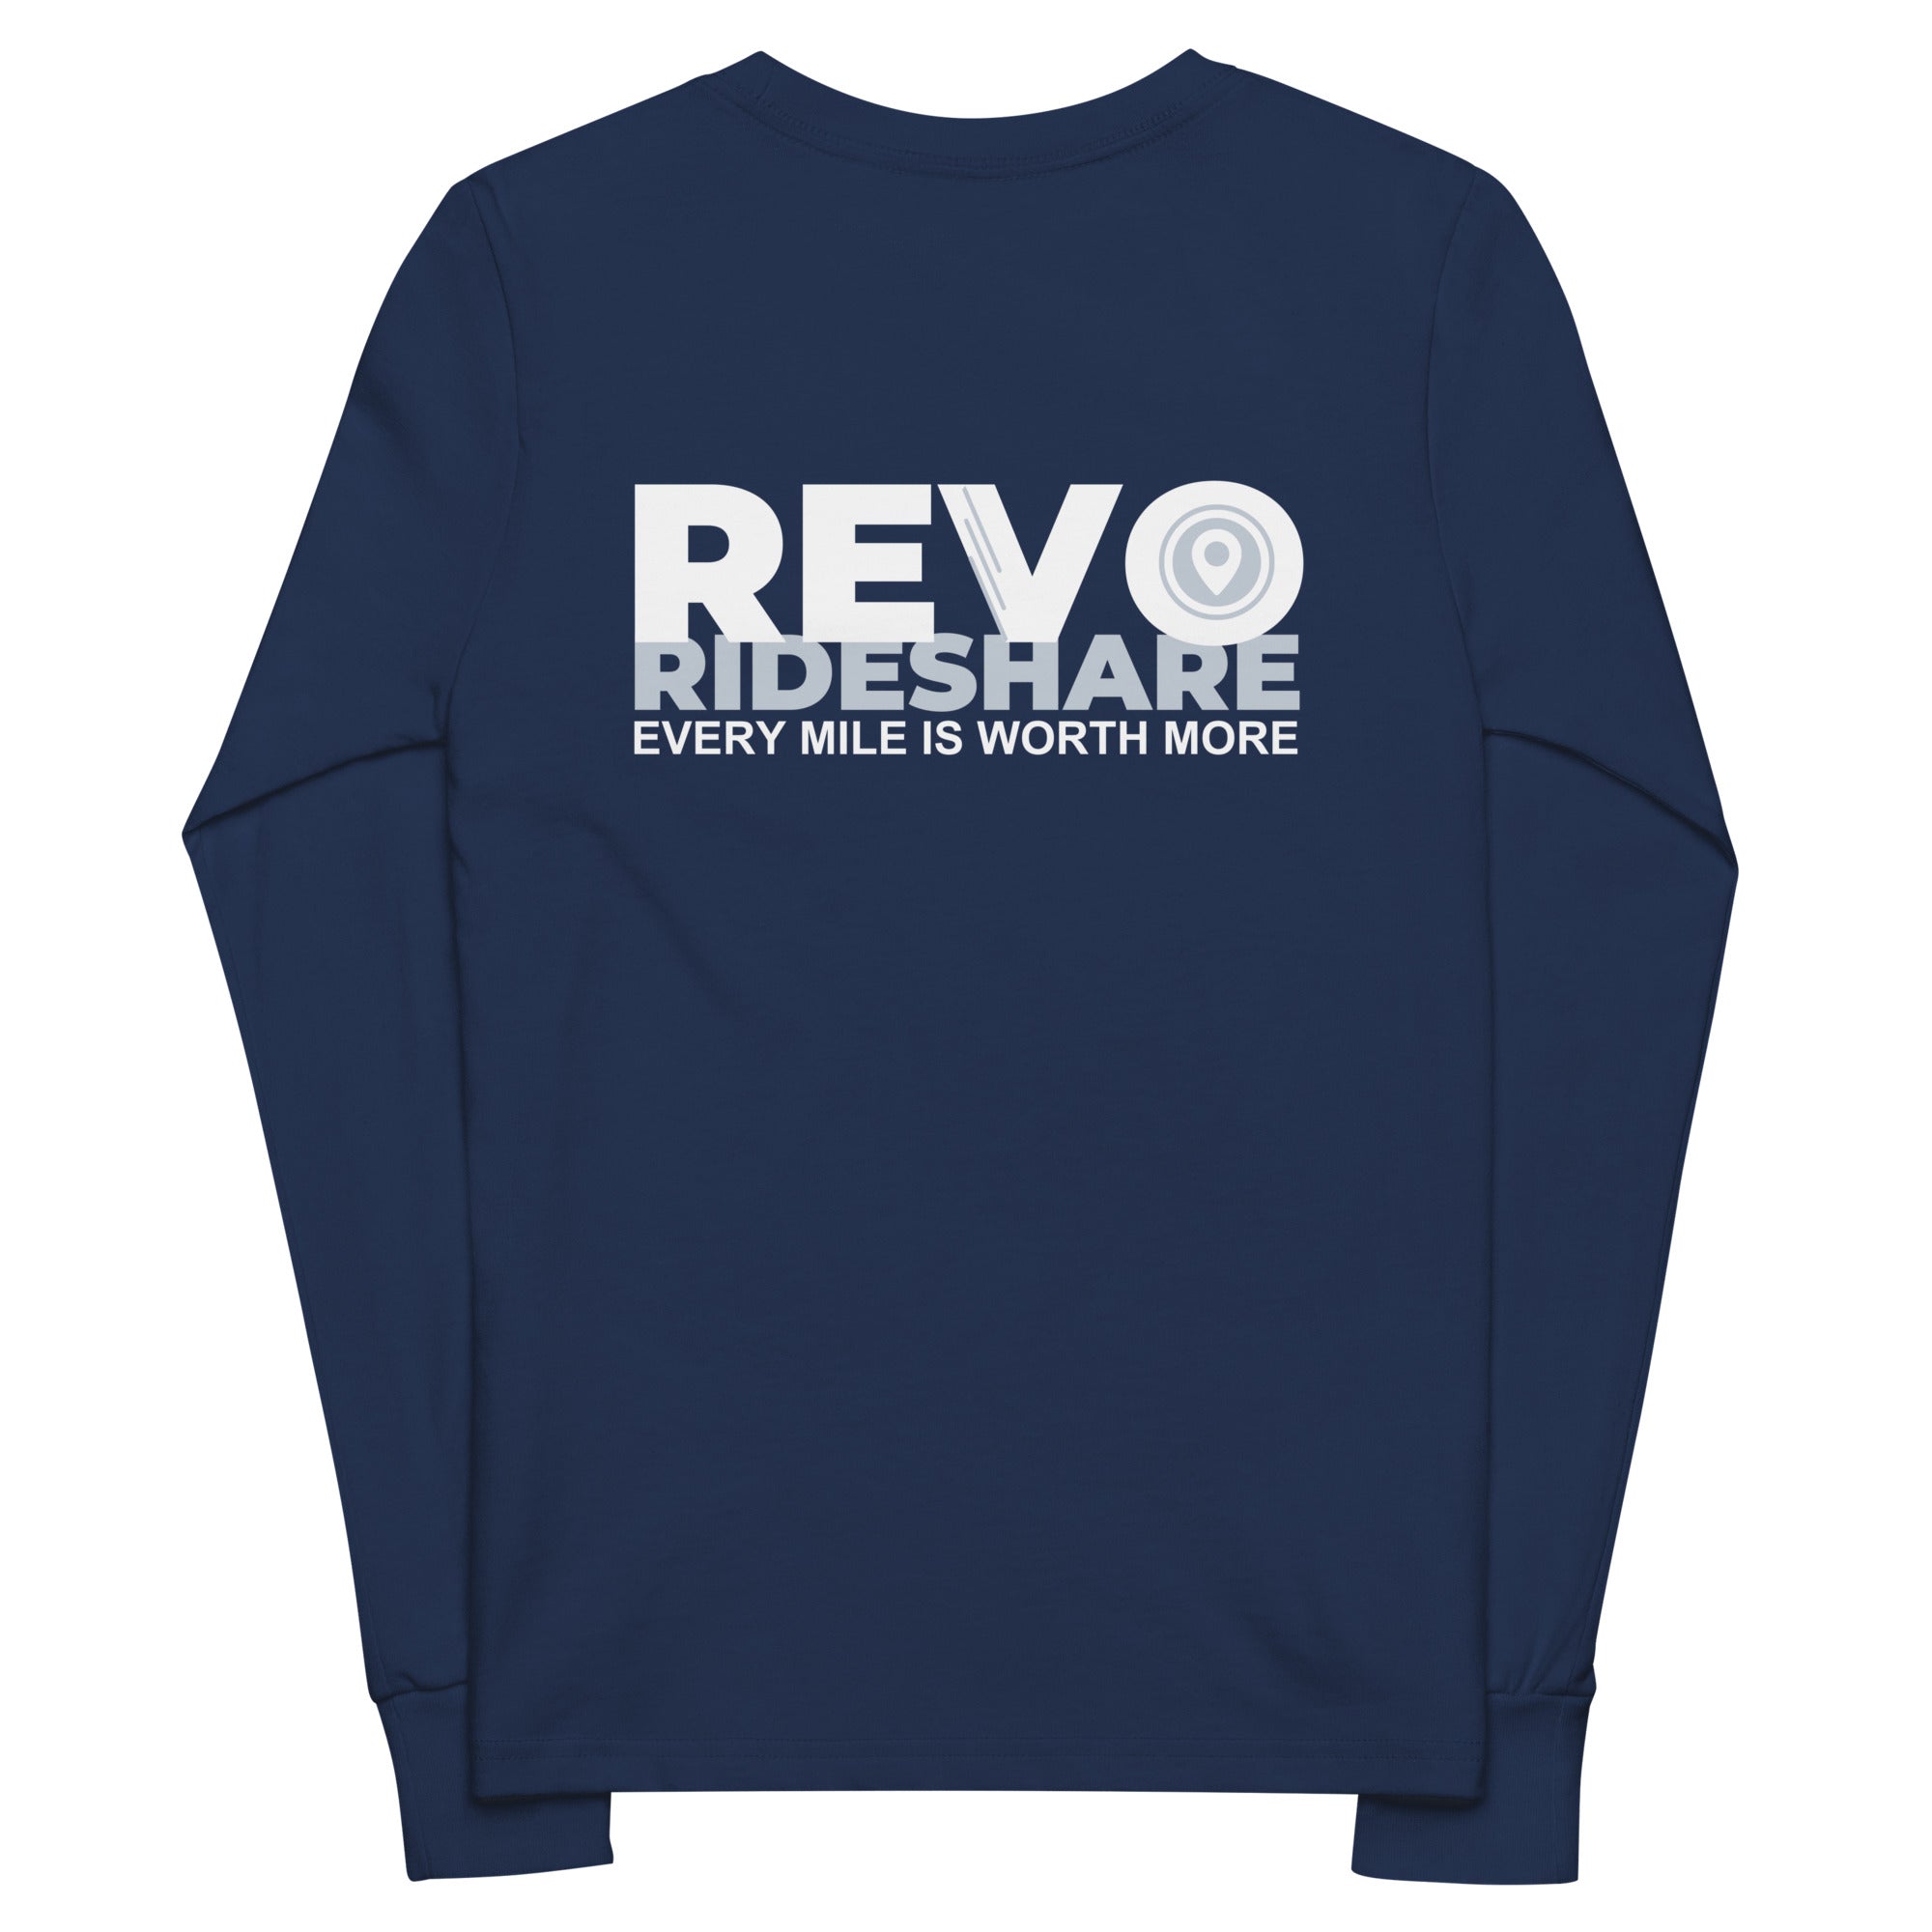 REVO Rideshare Youth long sleeve tee